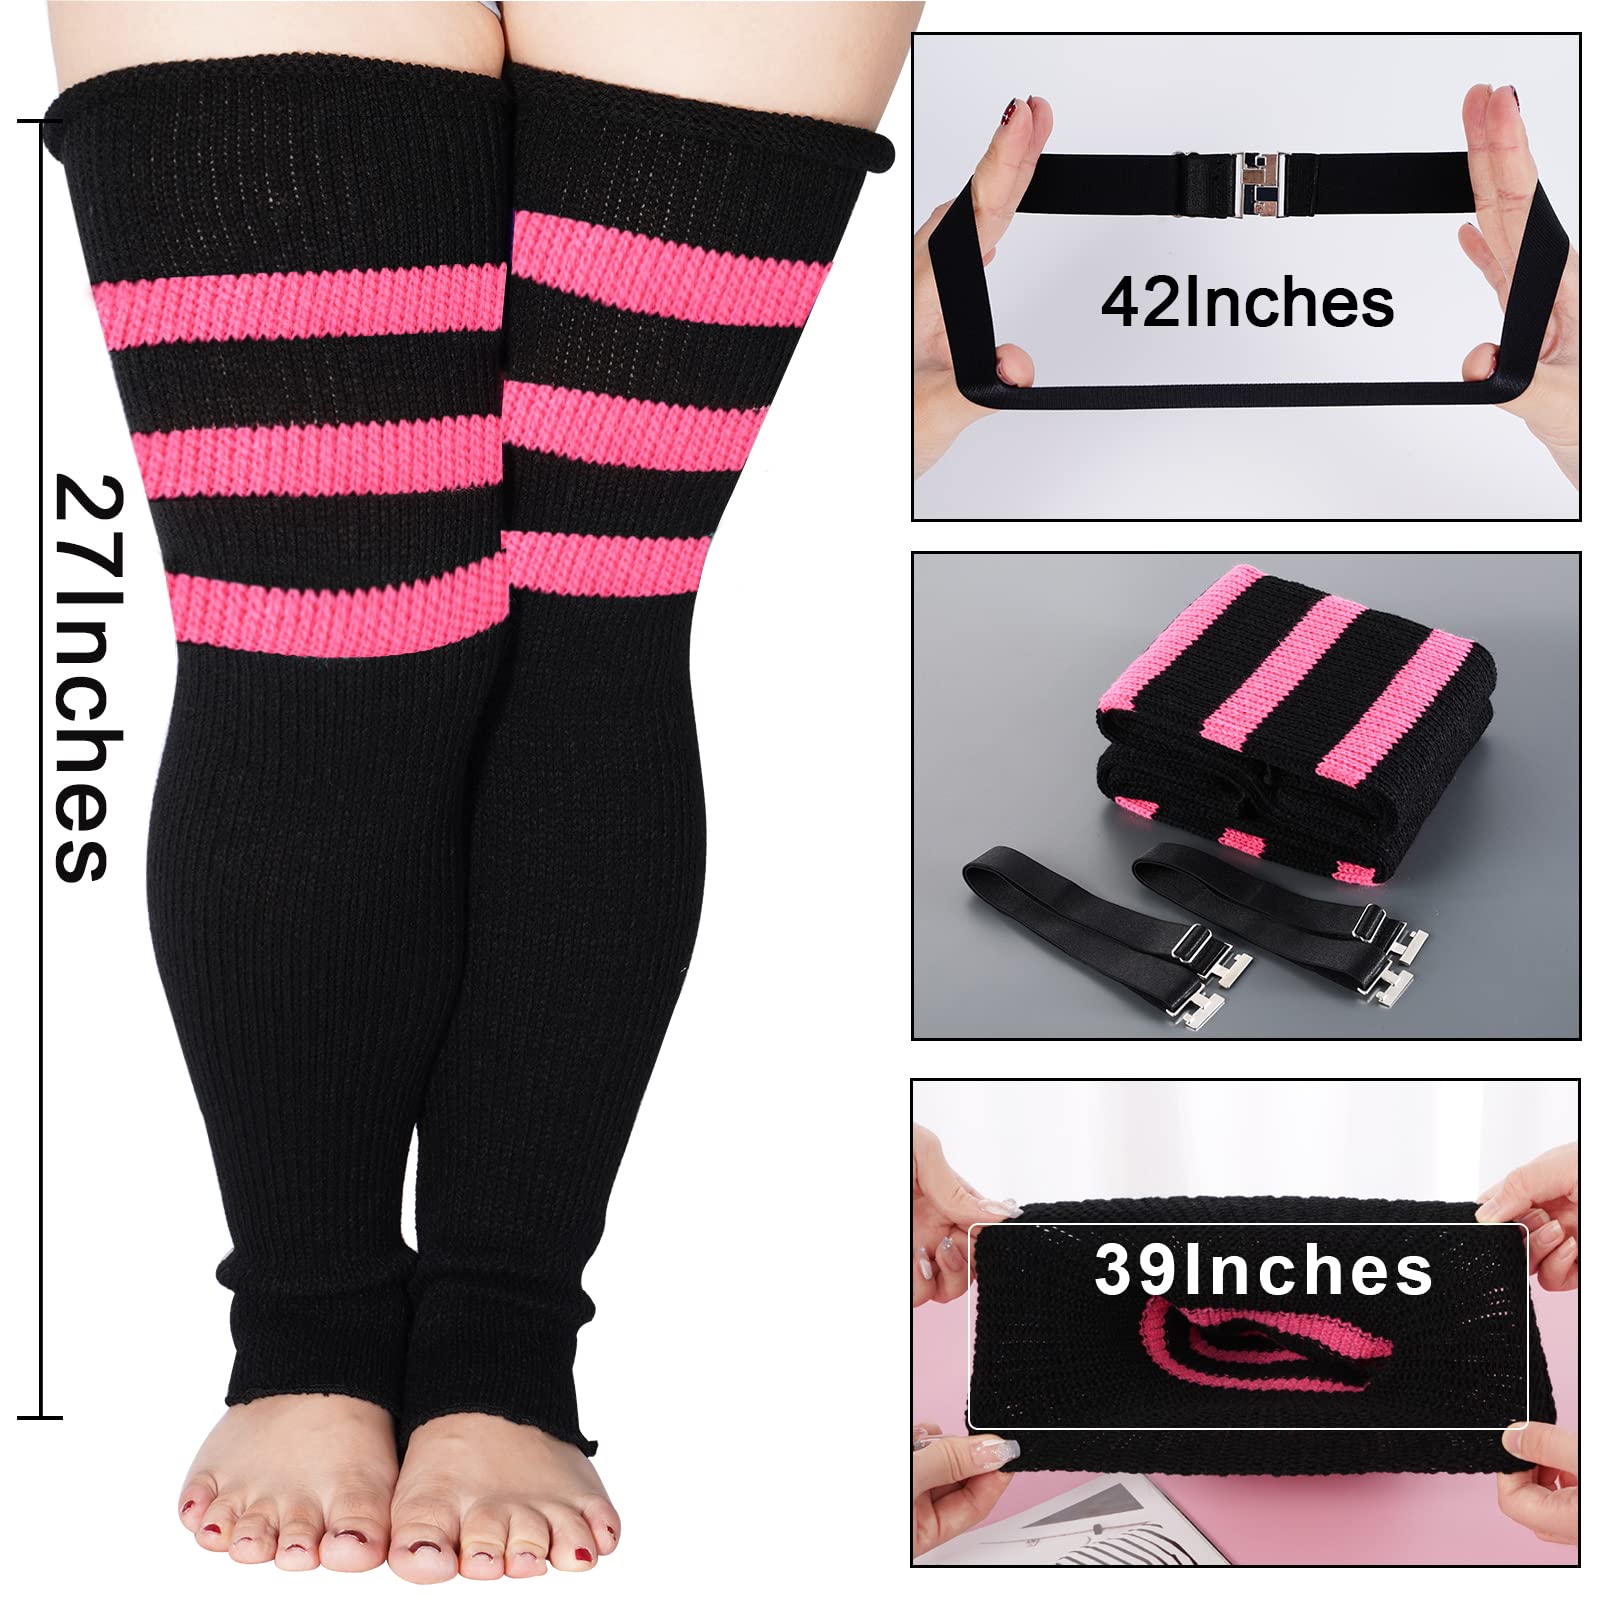 Plus Size Leg Warmers for Women-Black & Pink - Moon Wood